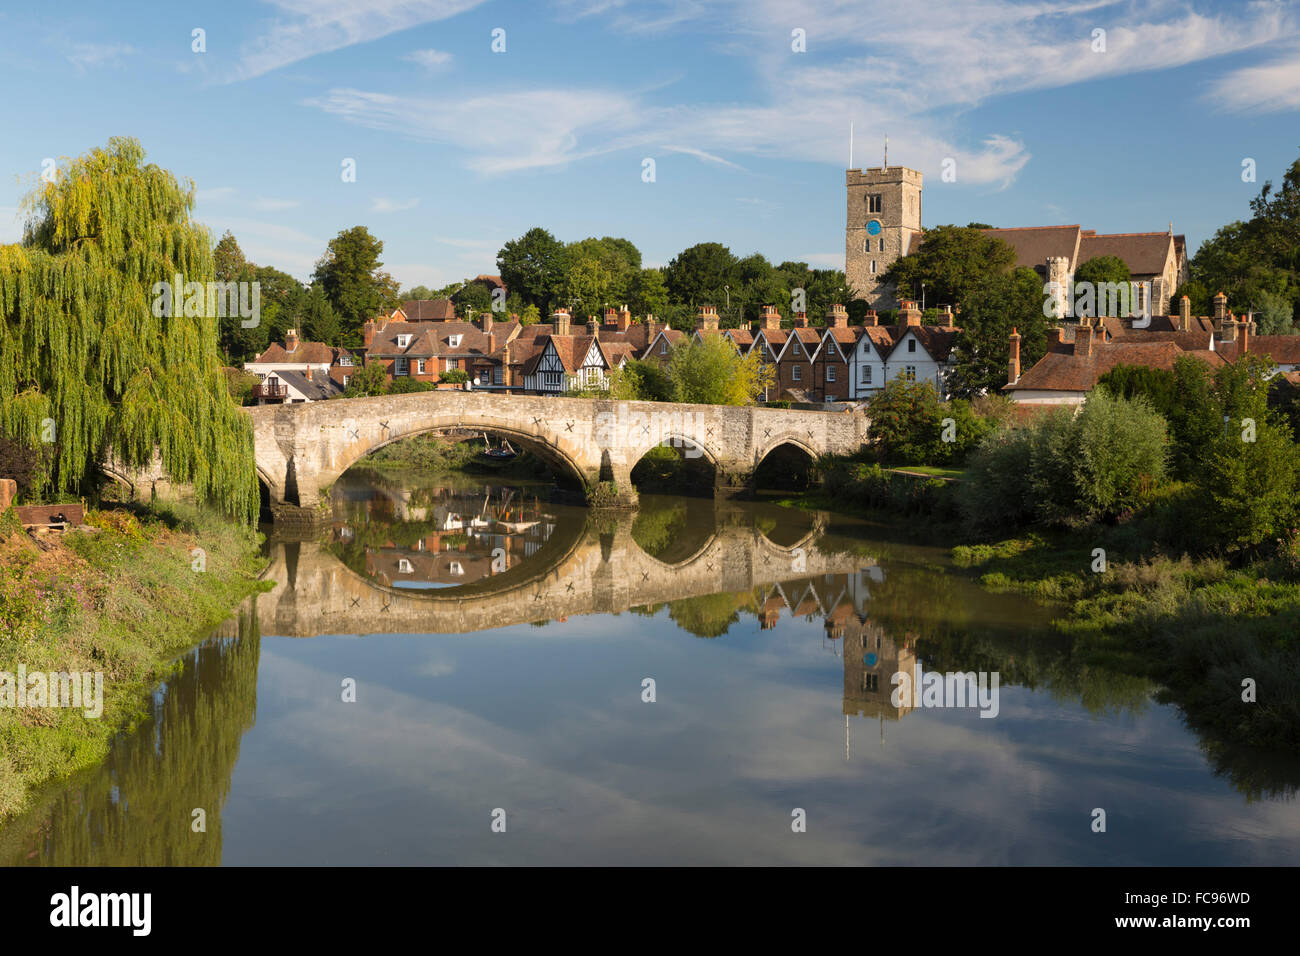 Aylesford Old Bridge and village on River Medway, Aylesford, Kent, England, United Kingdom, Europe Stock Photo